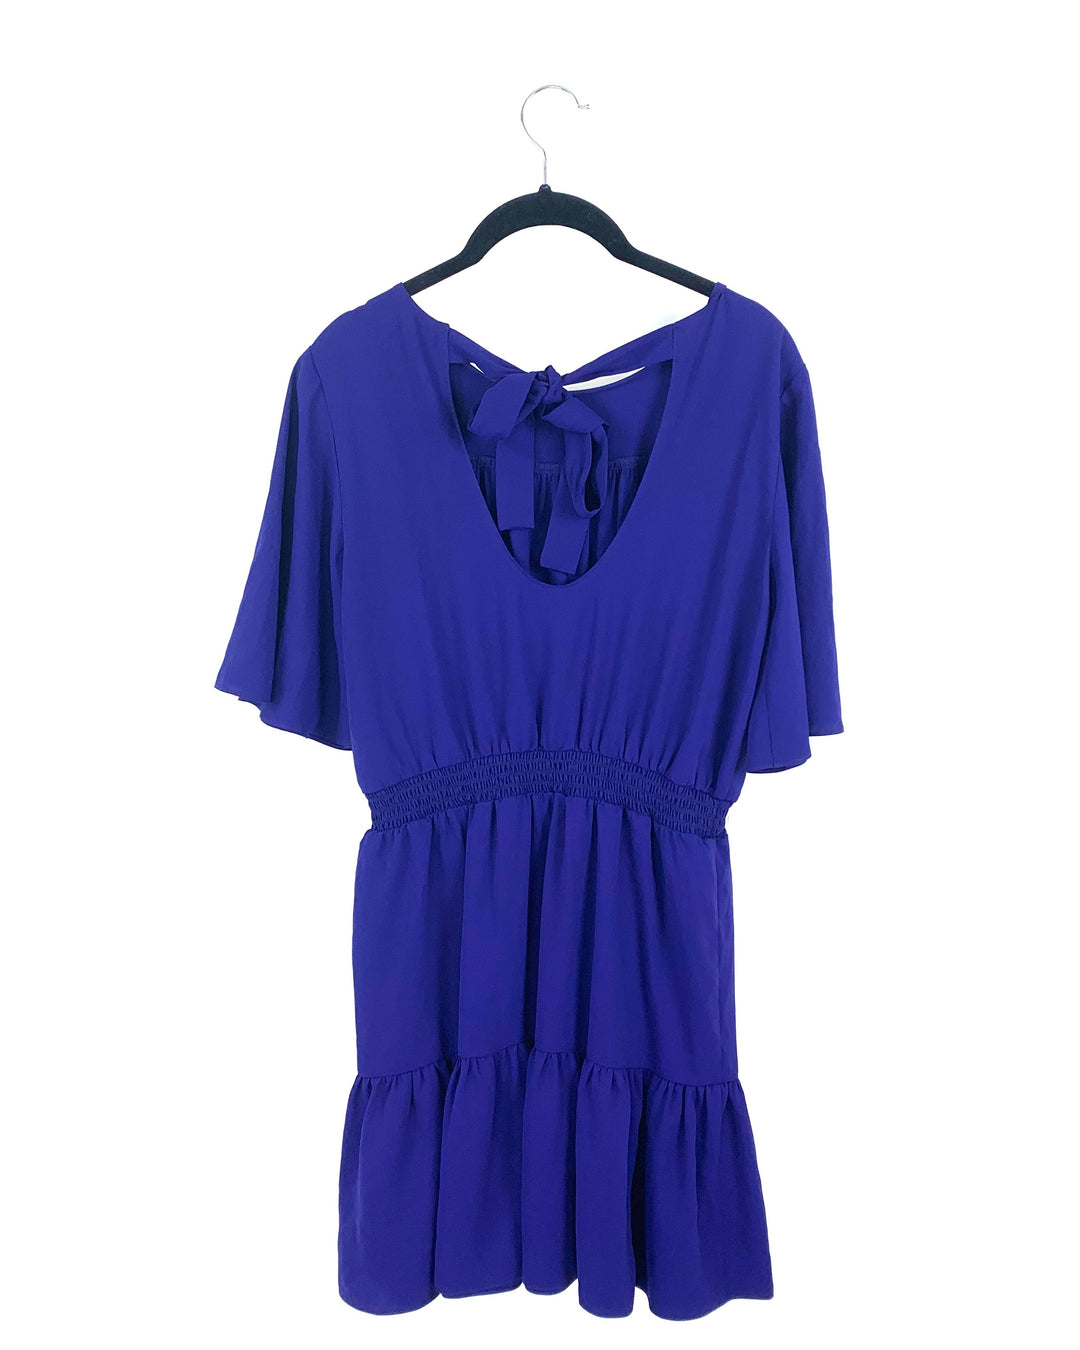 Purple Flare Dress-Small